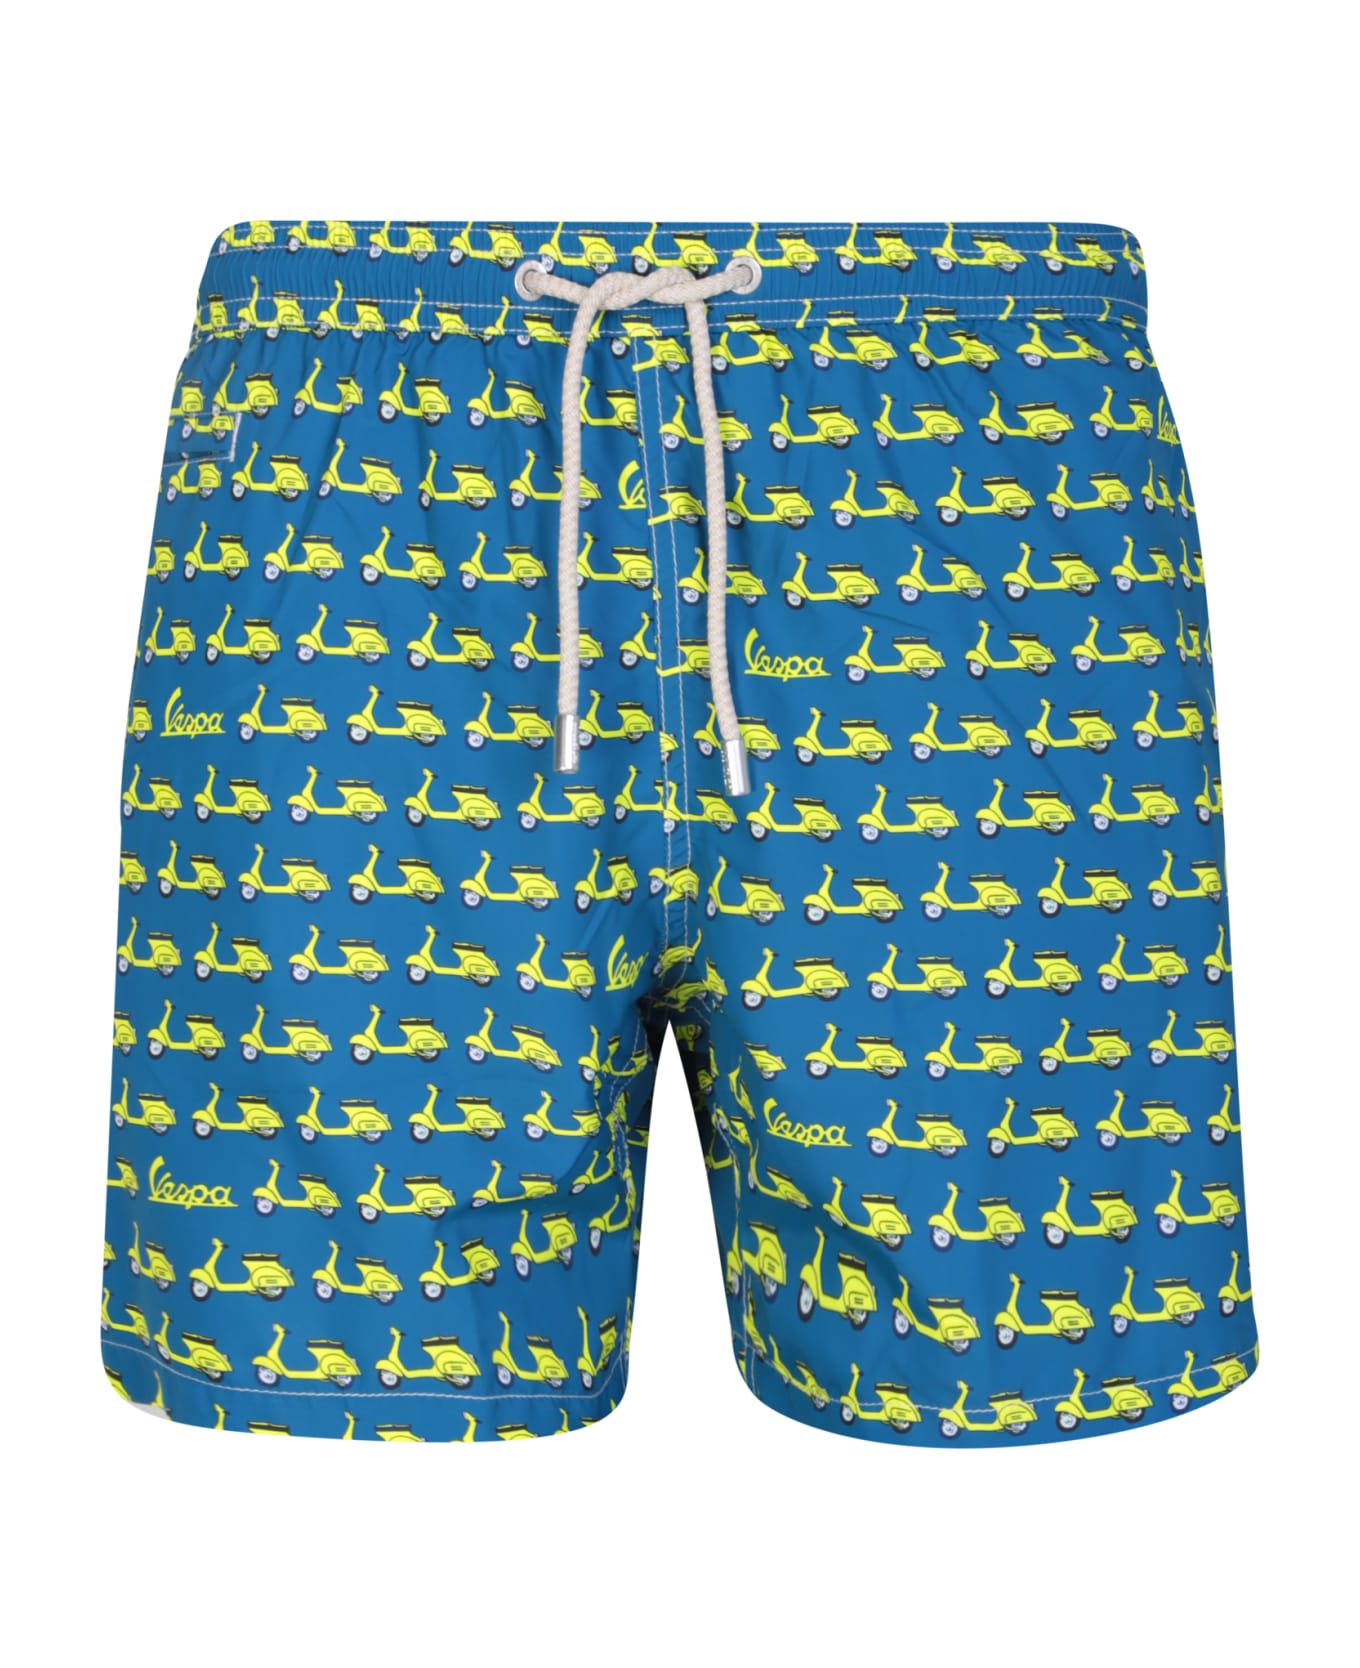 MC2 Saint Barth Light Blue/yellow Vespa Print Swim Shorts - Yellow